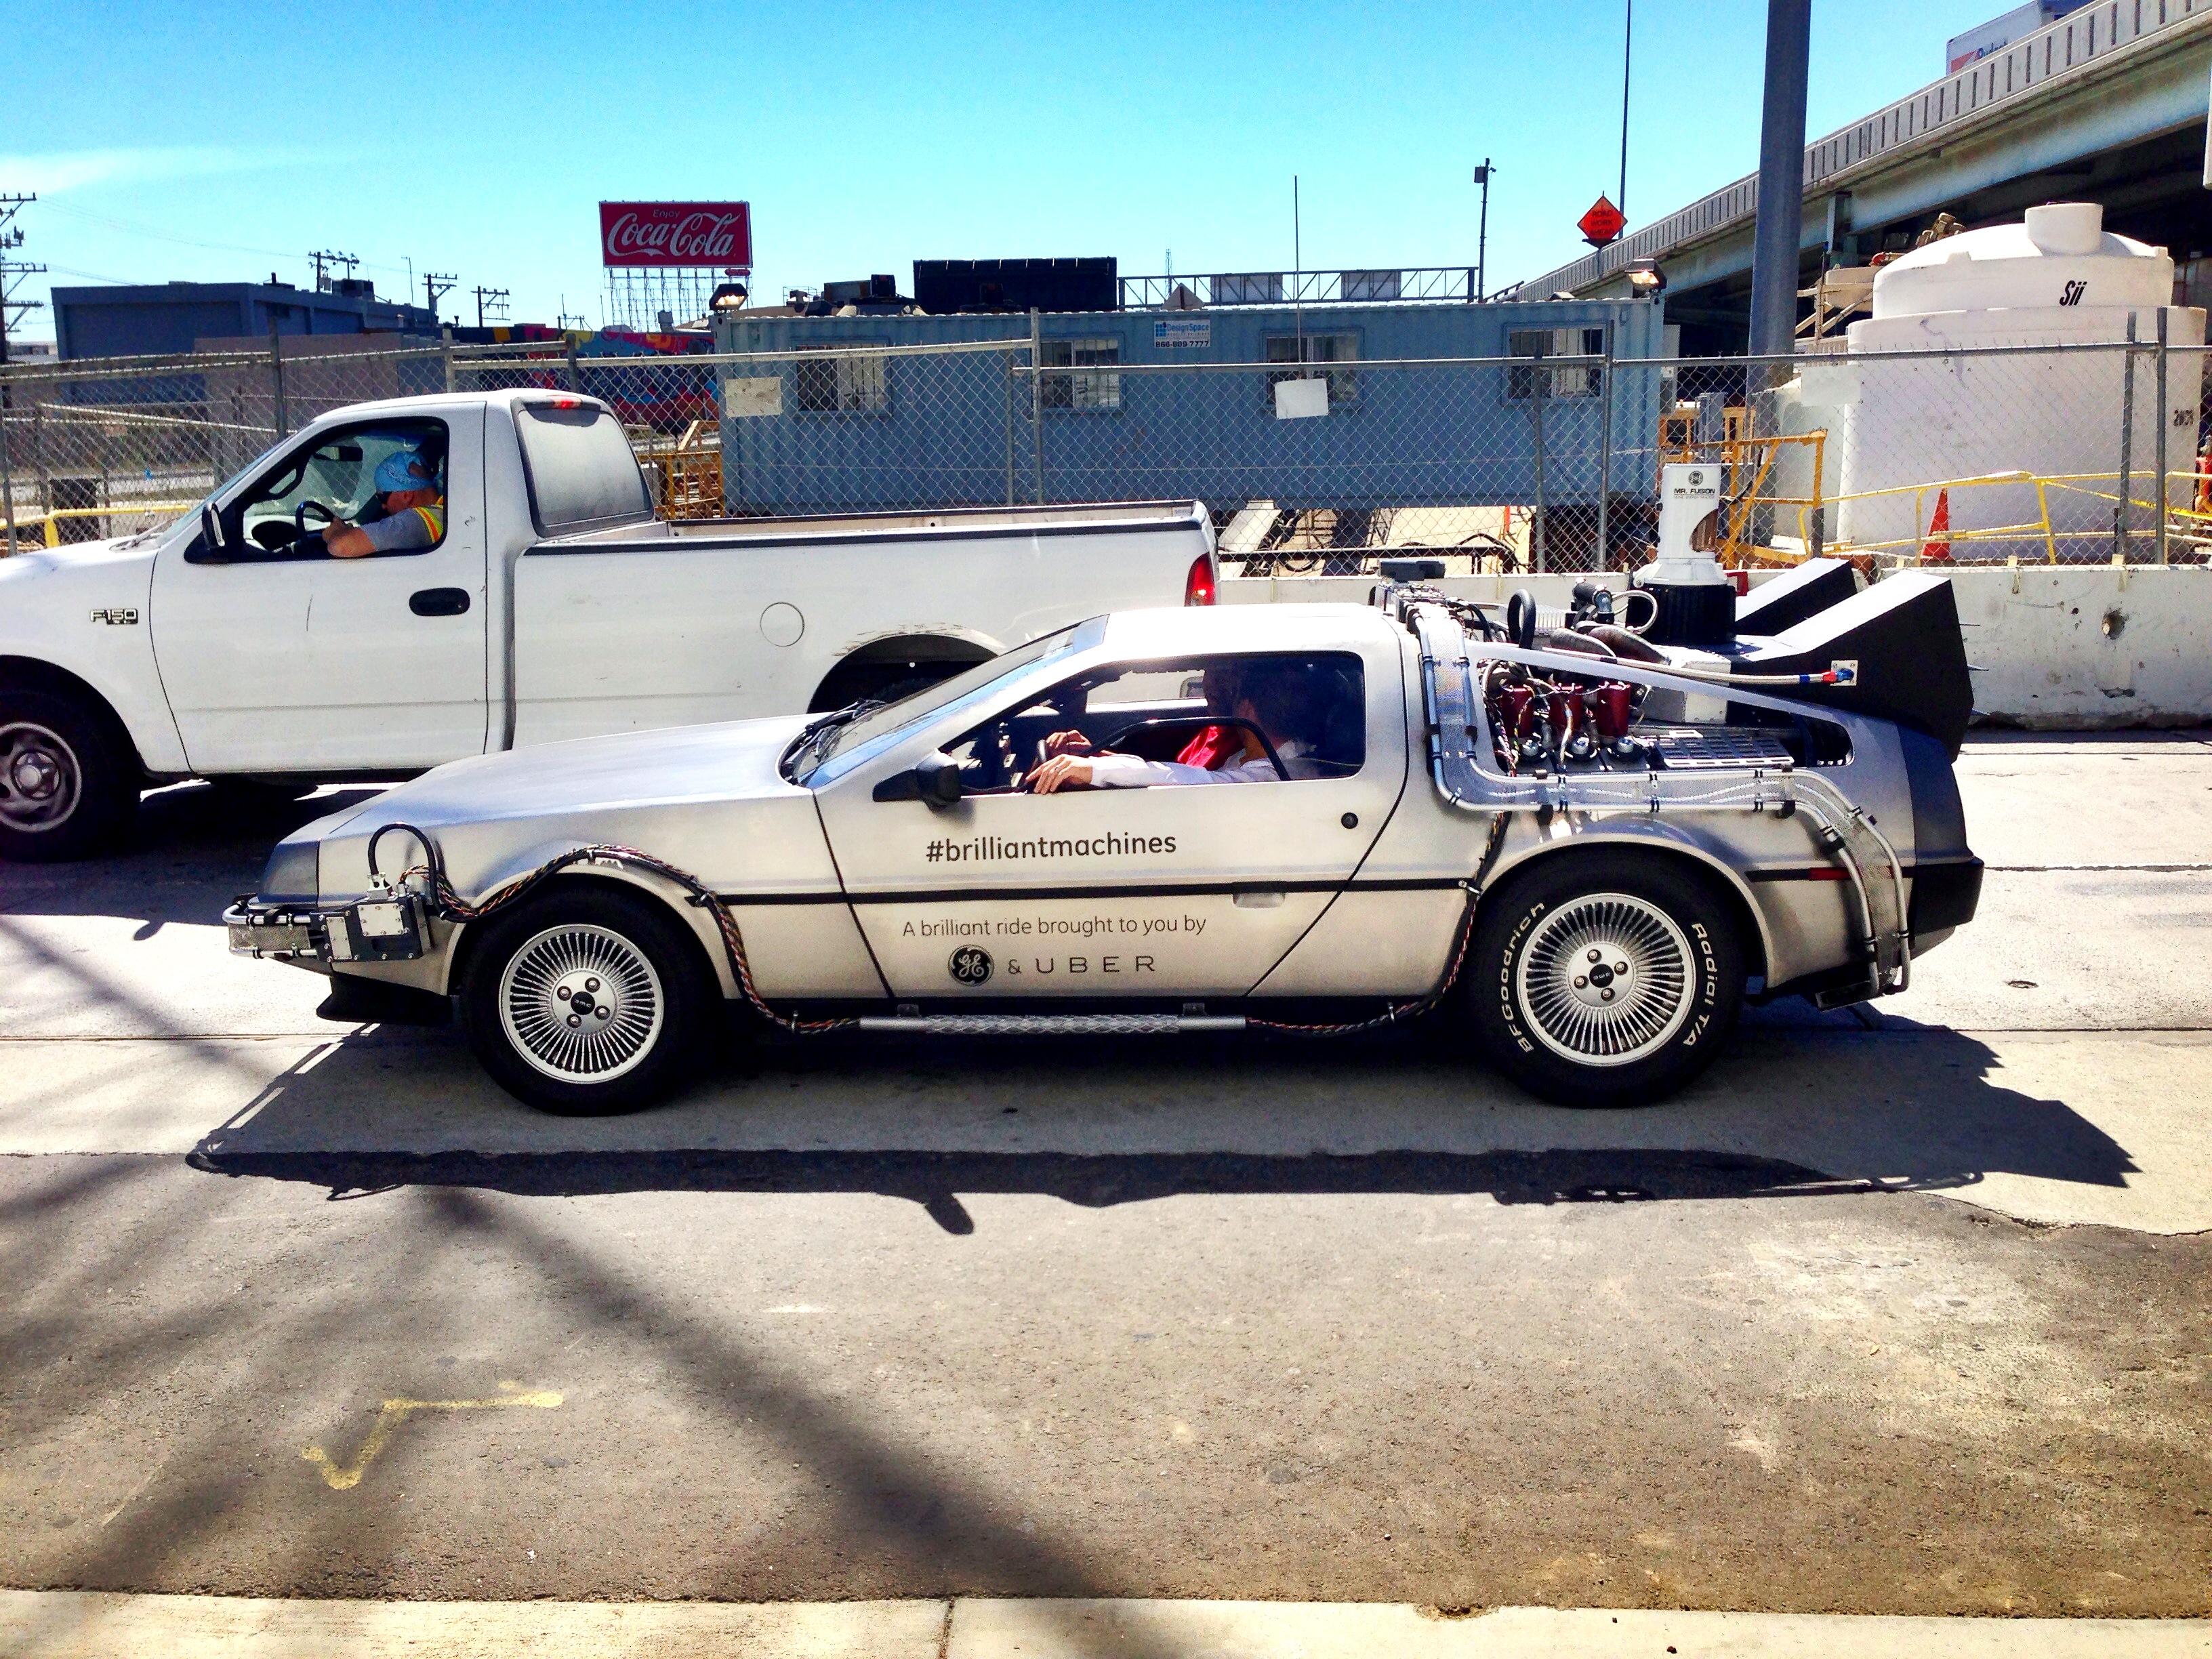 DeLorean "Ubercab" sighting